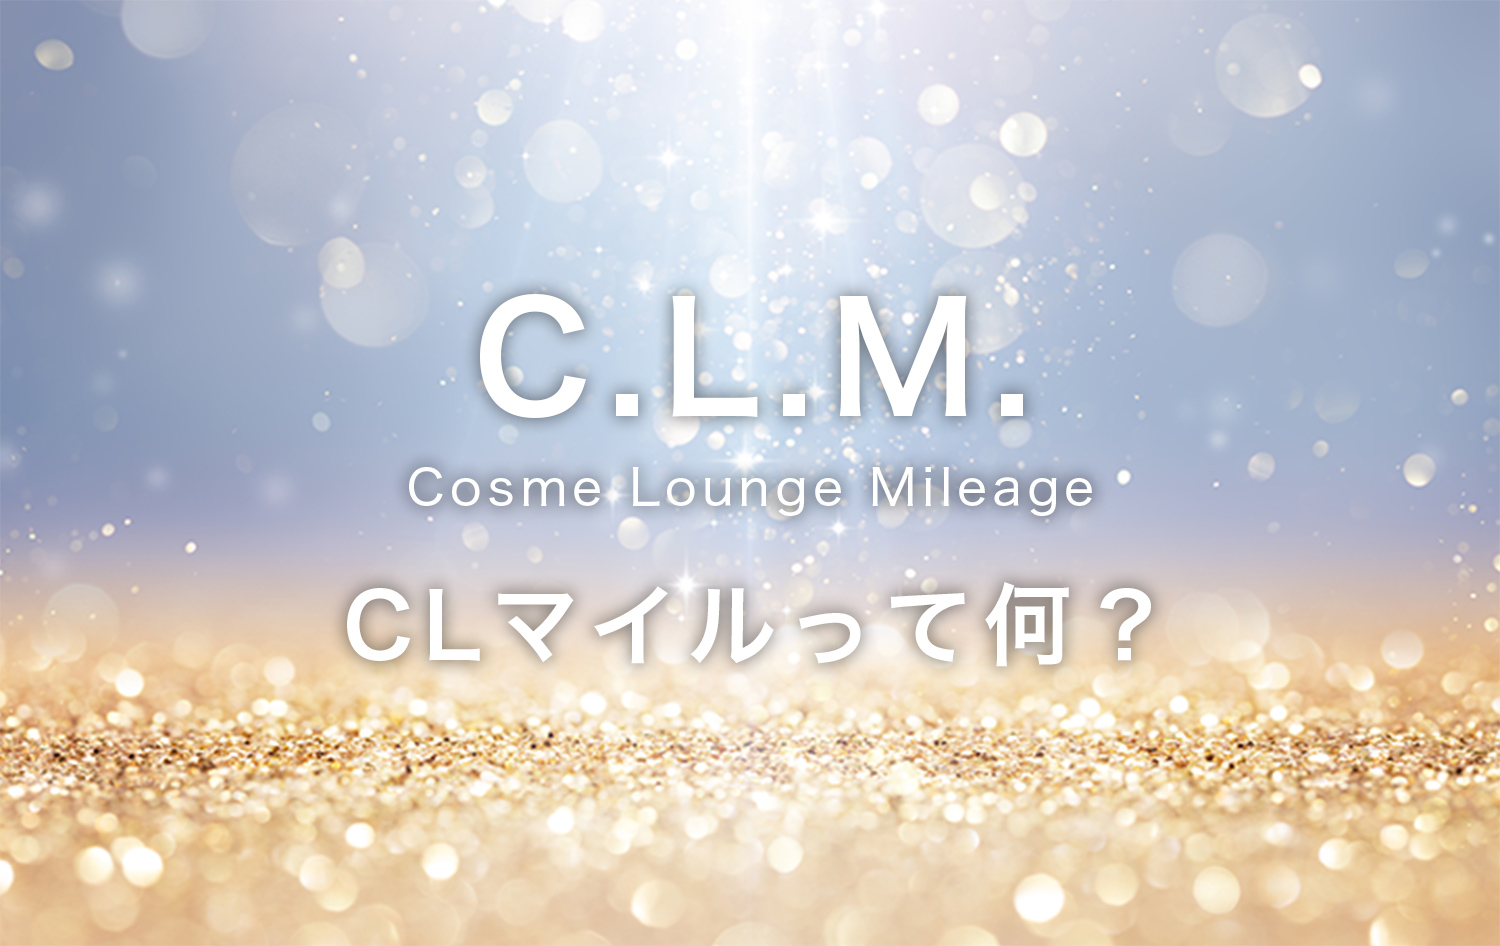 Cosme Lounge Mile